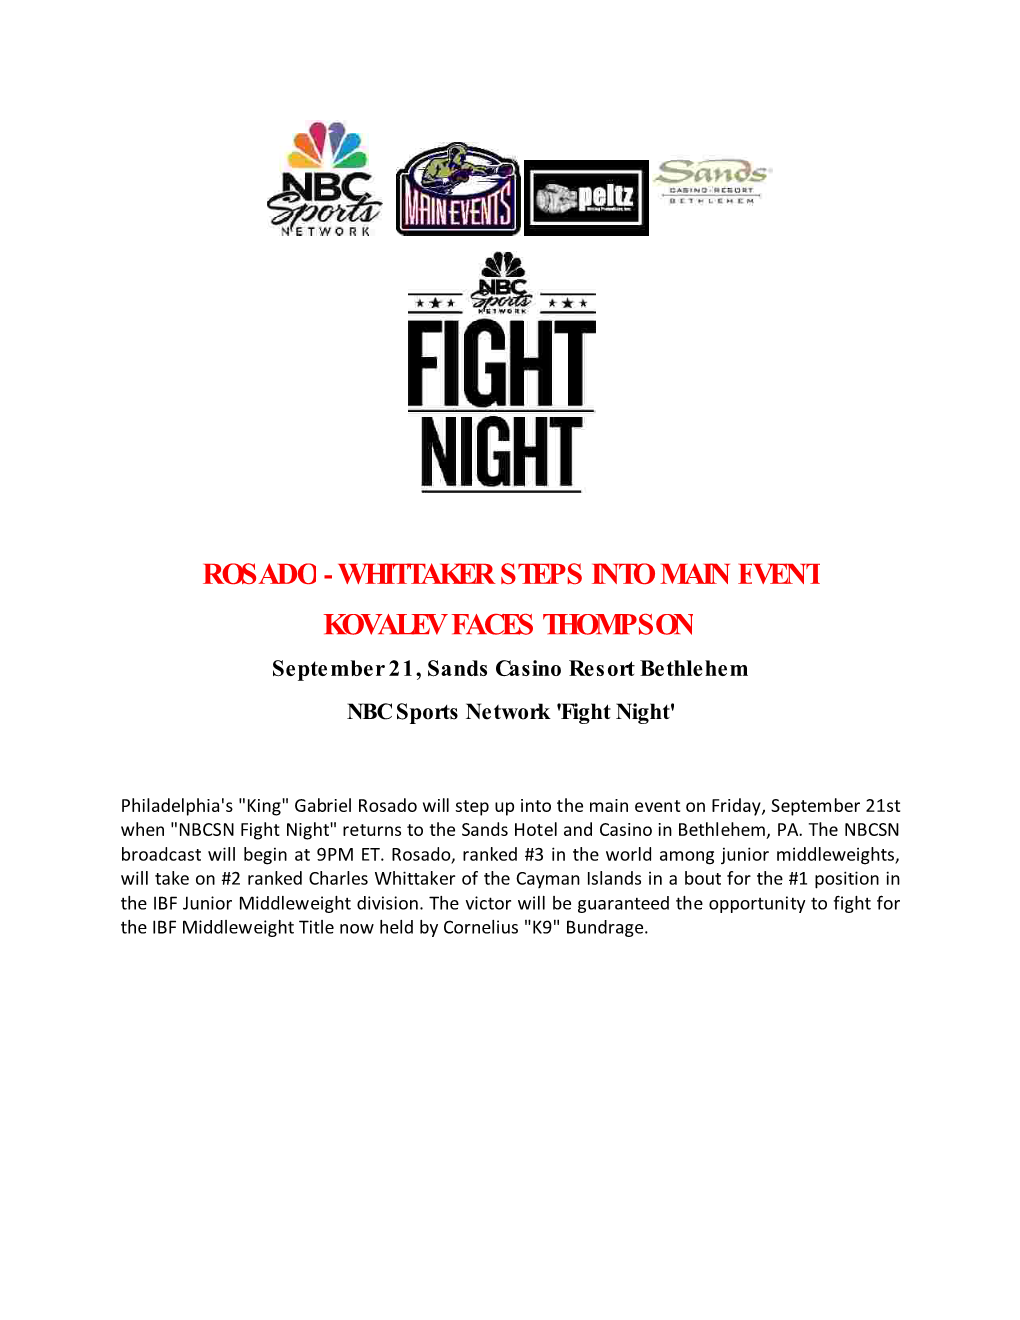 ROSADO-WHITTAKER STEPS INTO MAIN EVENT KOVALEV FACES THOMPSON September 21, Sands Casino Resort Bethlehem NBC Sports Network 'Fight Night'